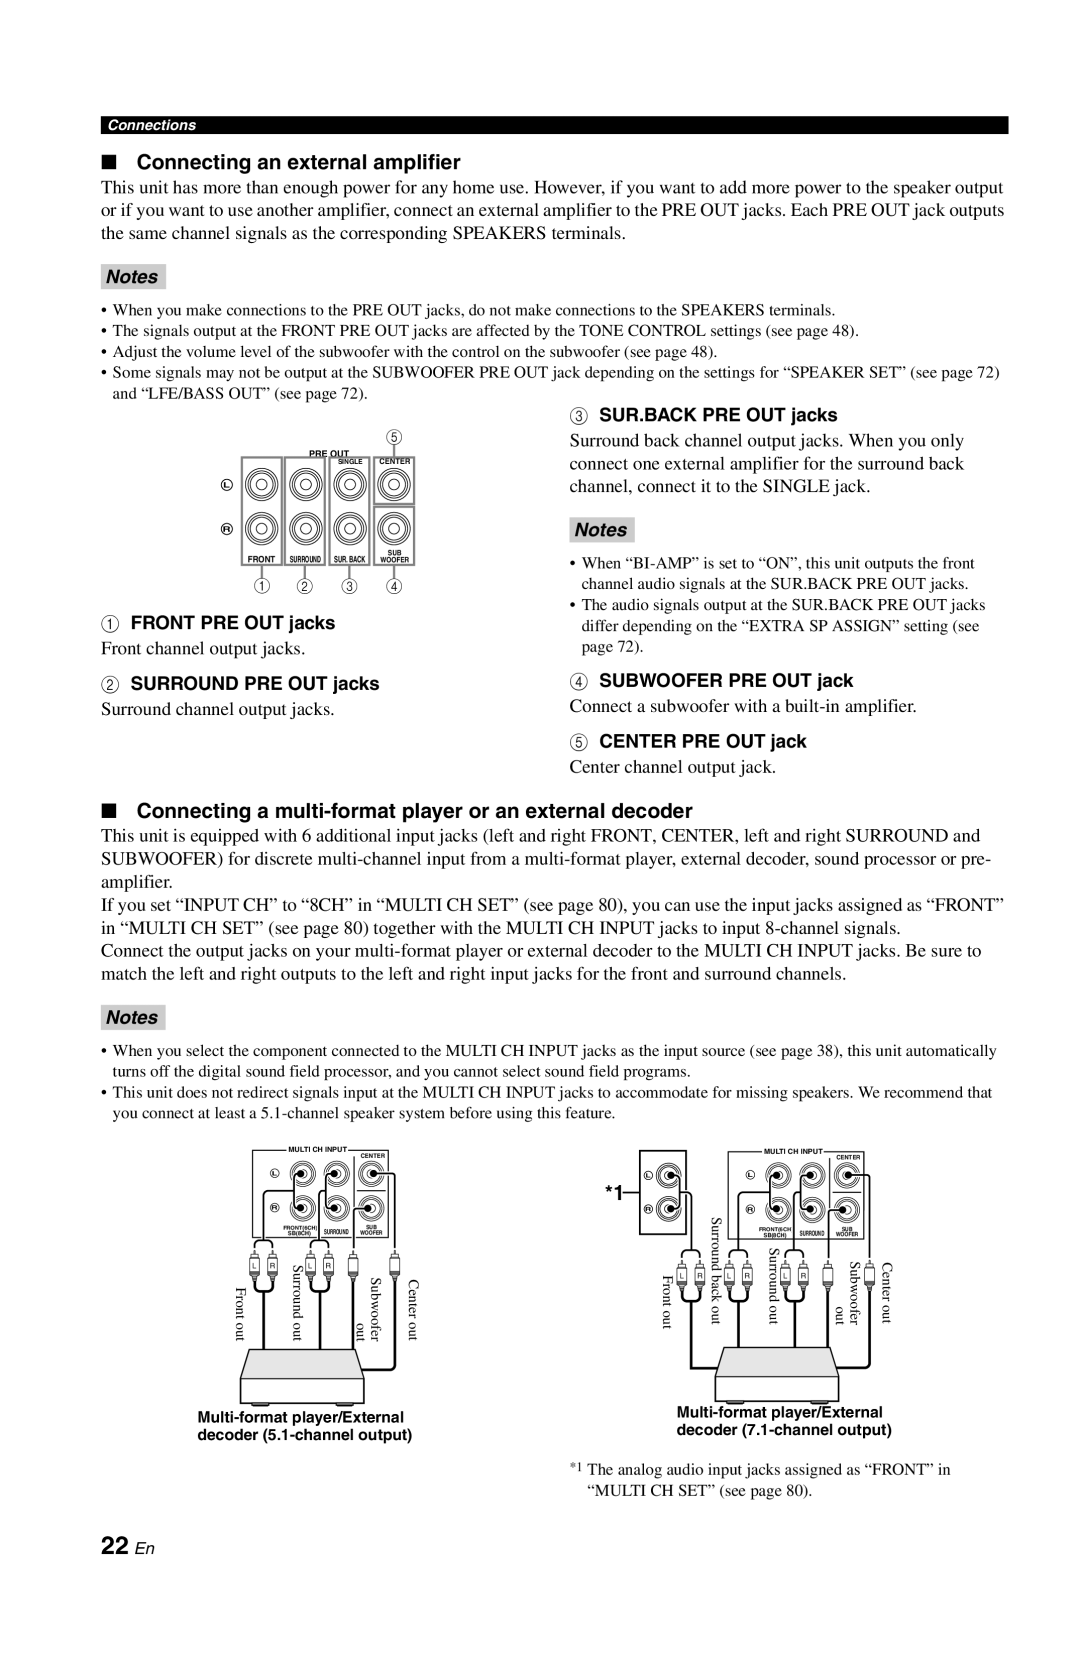 Yamaha RX-V861 owner manual 22 En, Connecting an external amplifier, Notes 